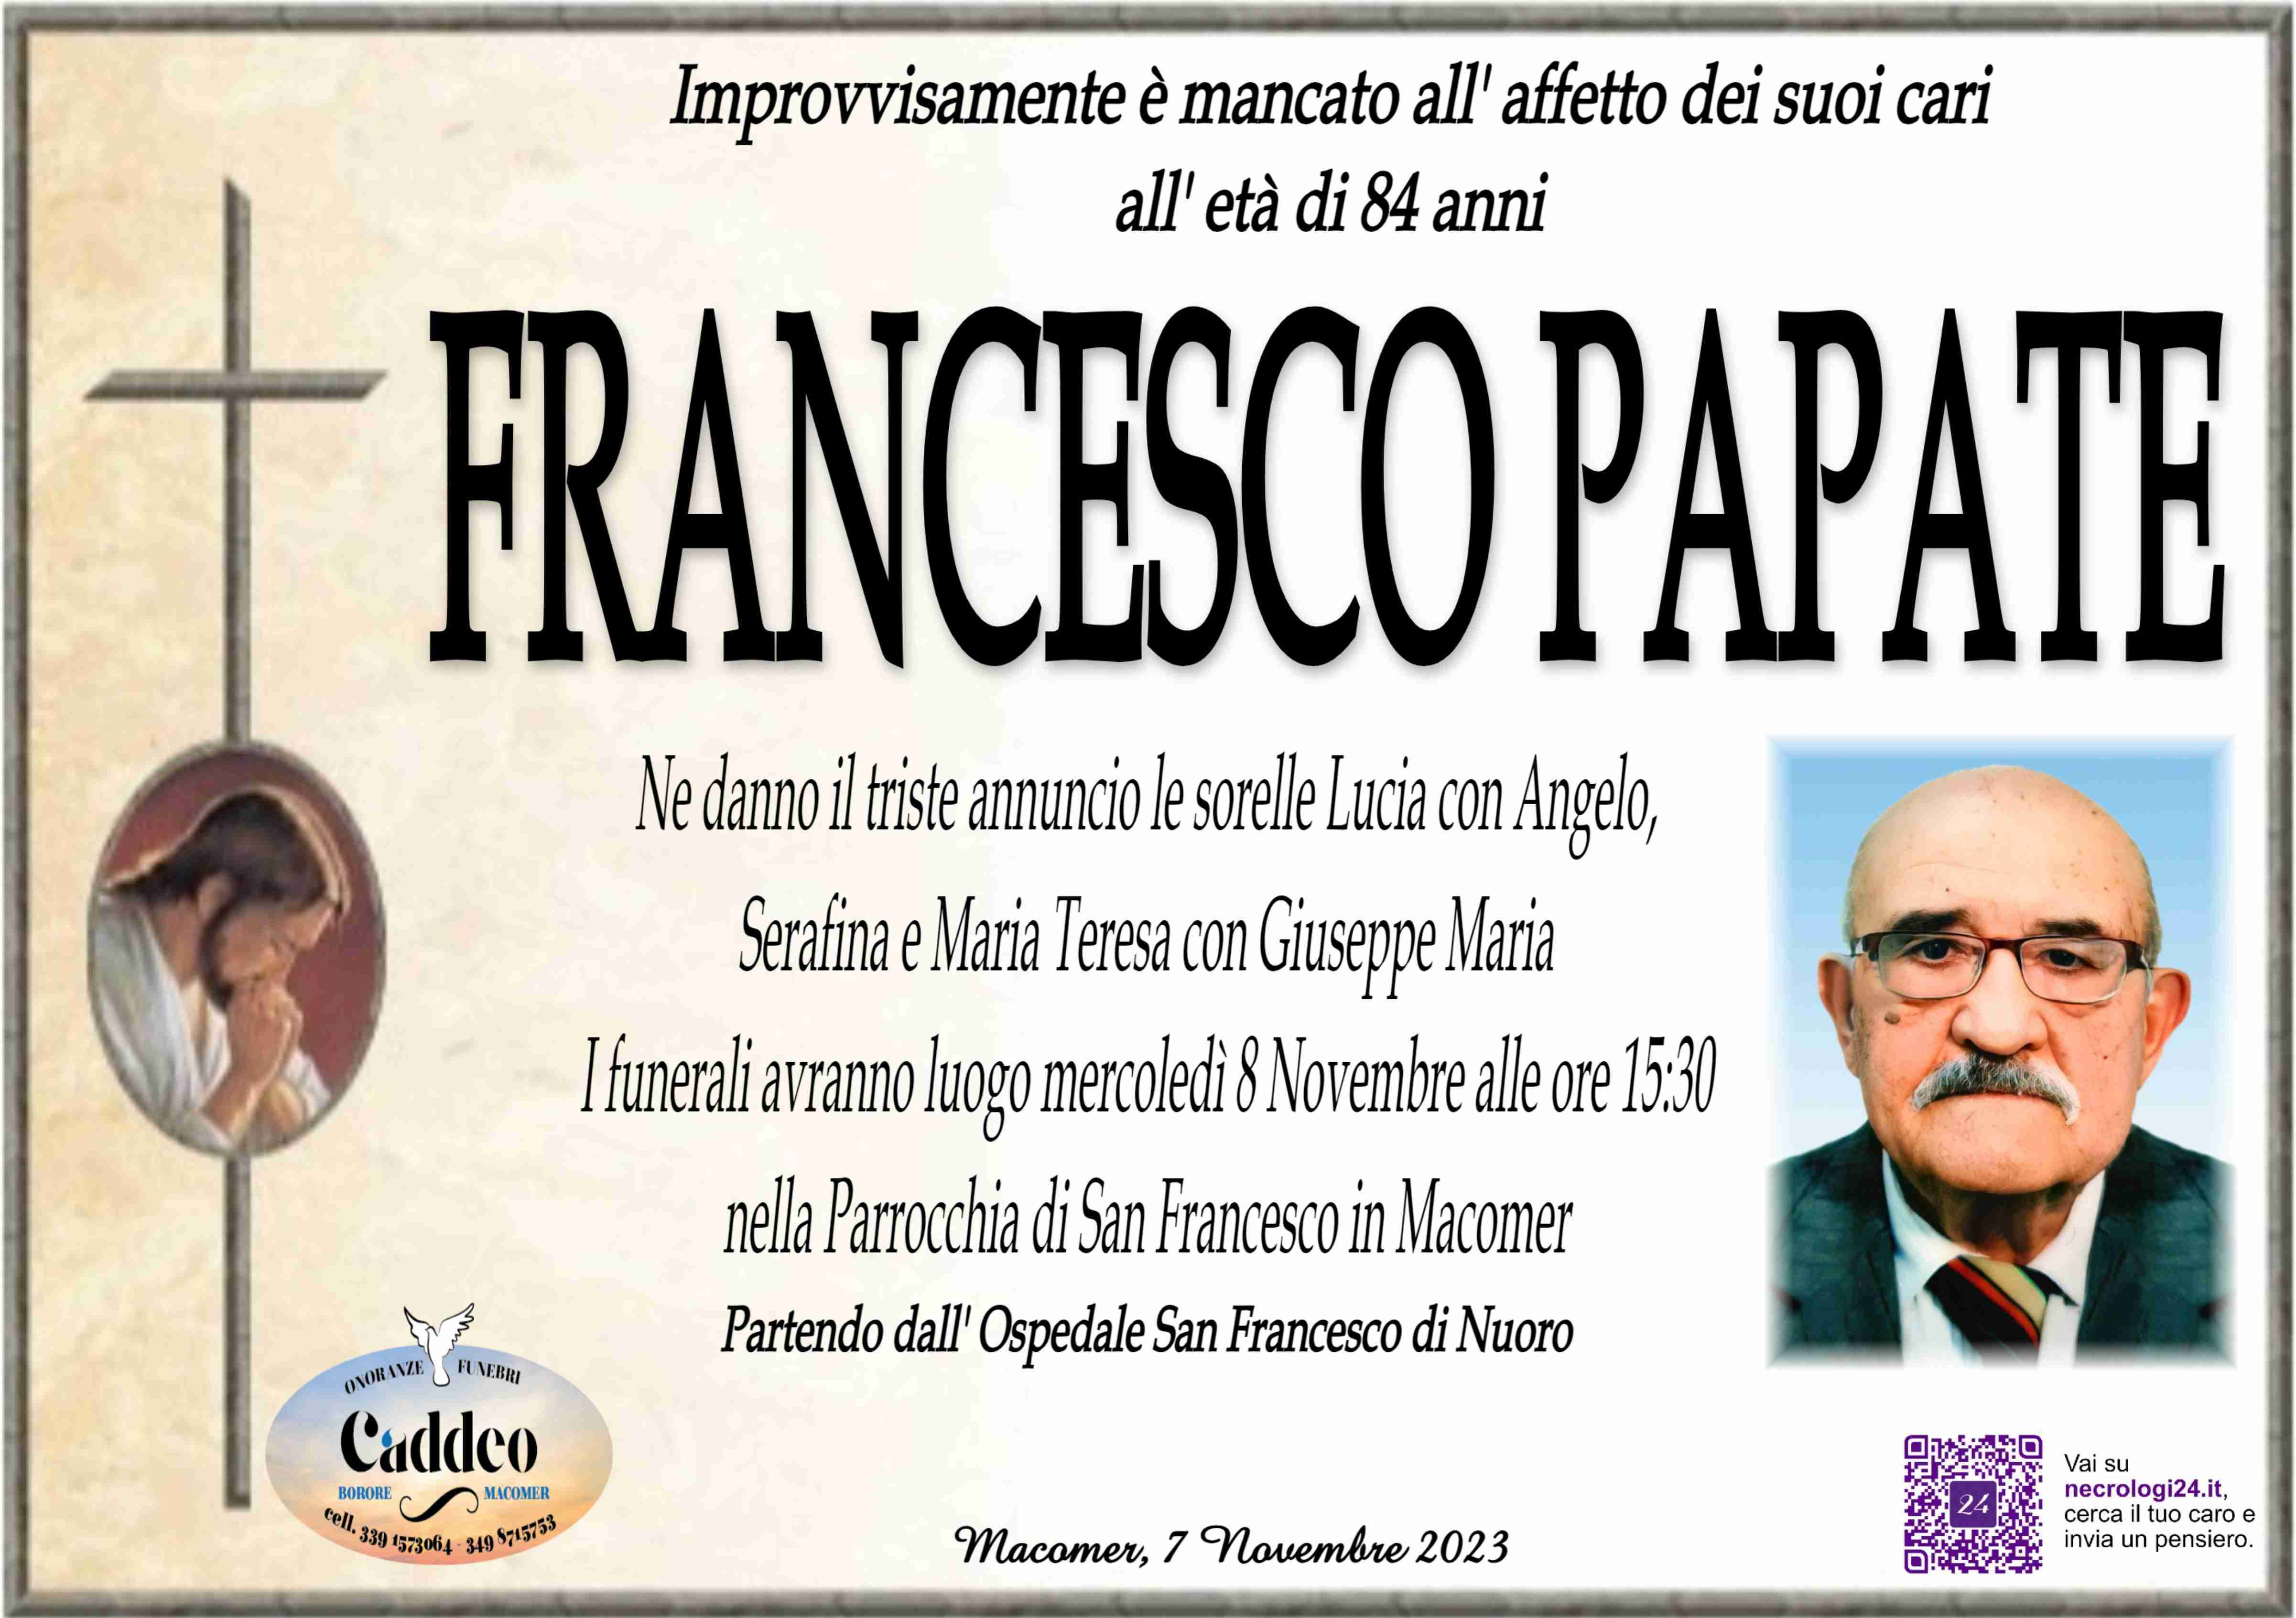 Francesco Papate